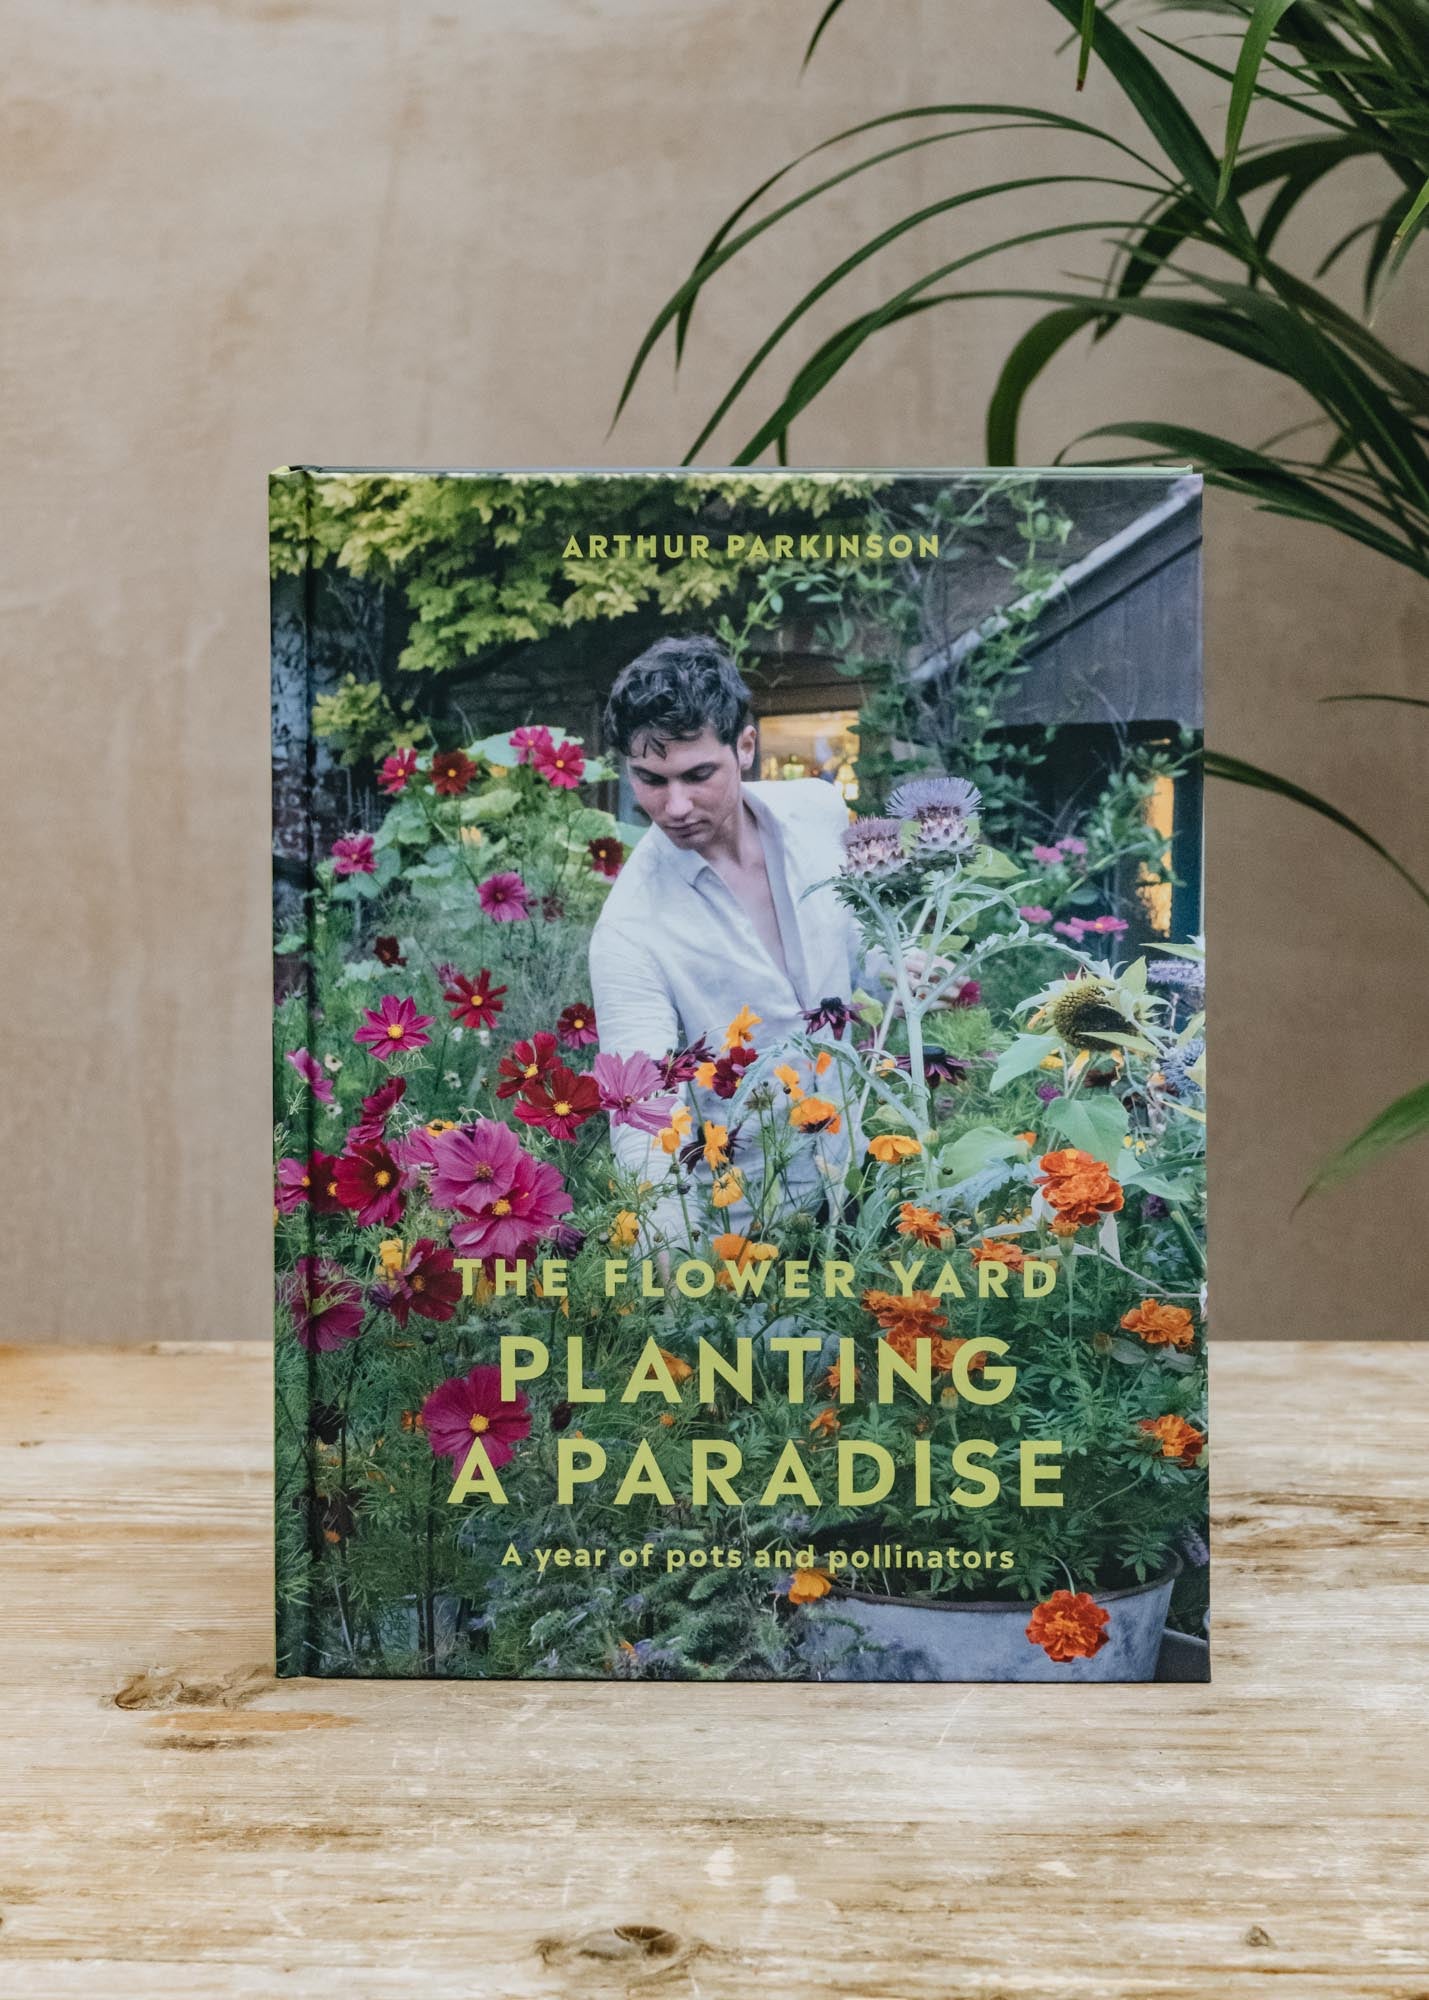 The Flower Yard: Planting A Paradise by Arthur Parkinson